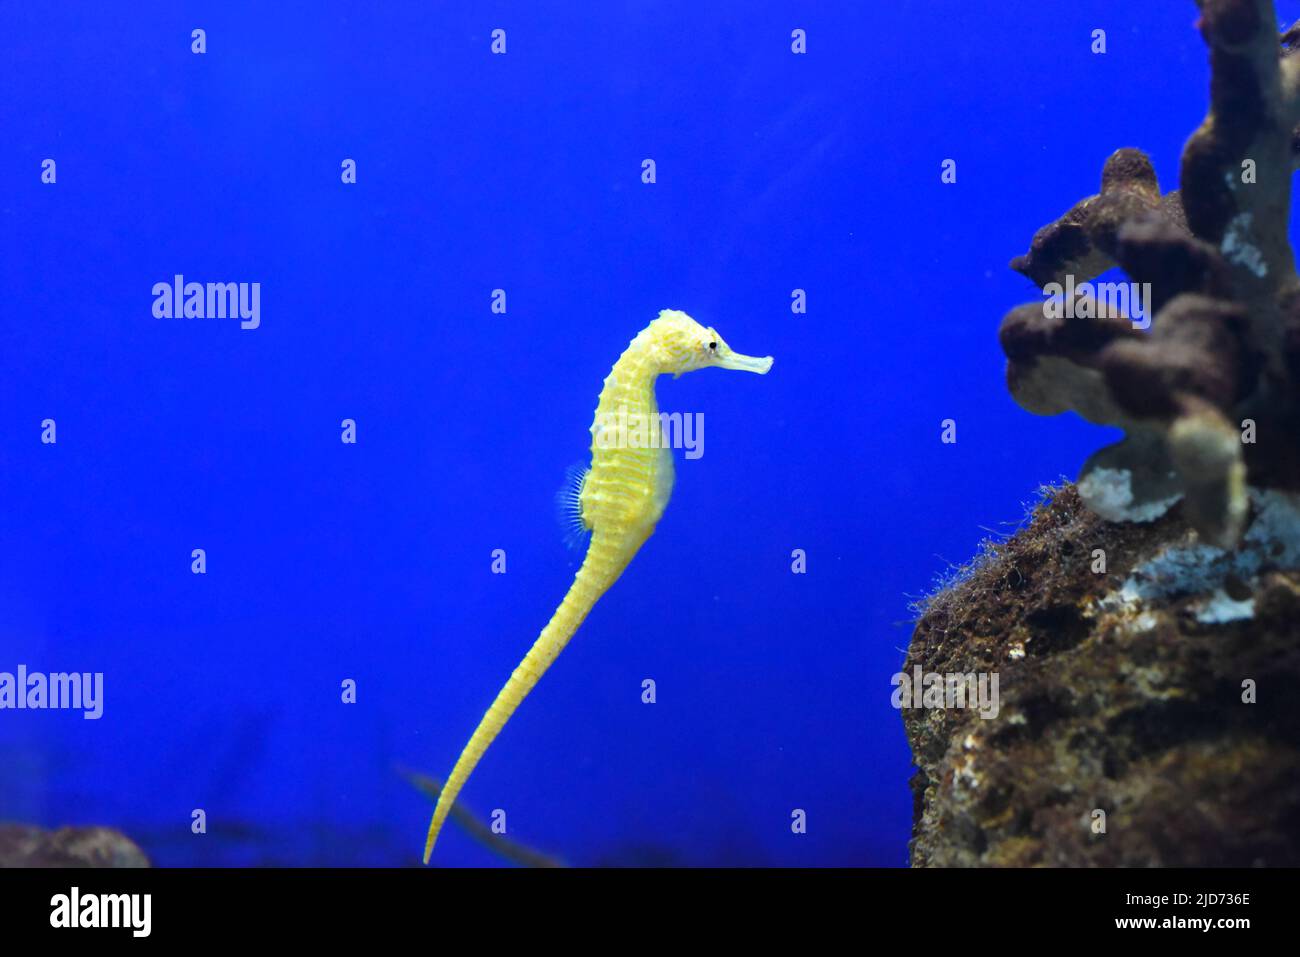 A yellow seahorse in an aquarium Stock Photo